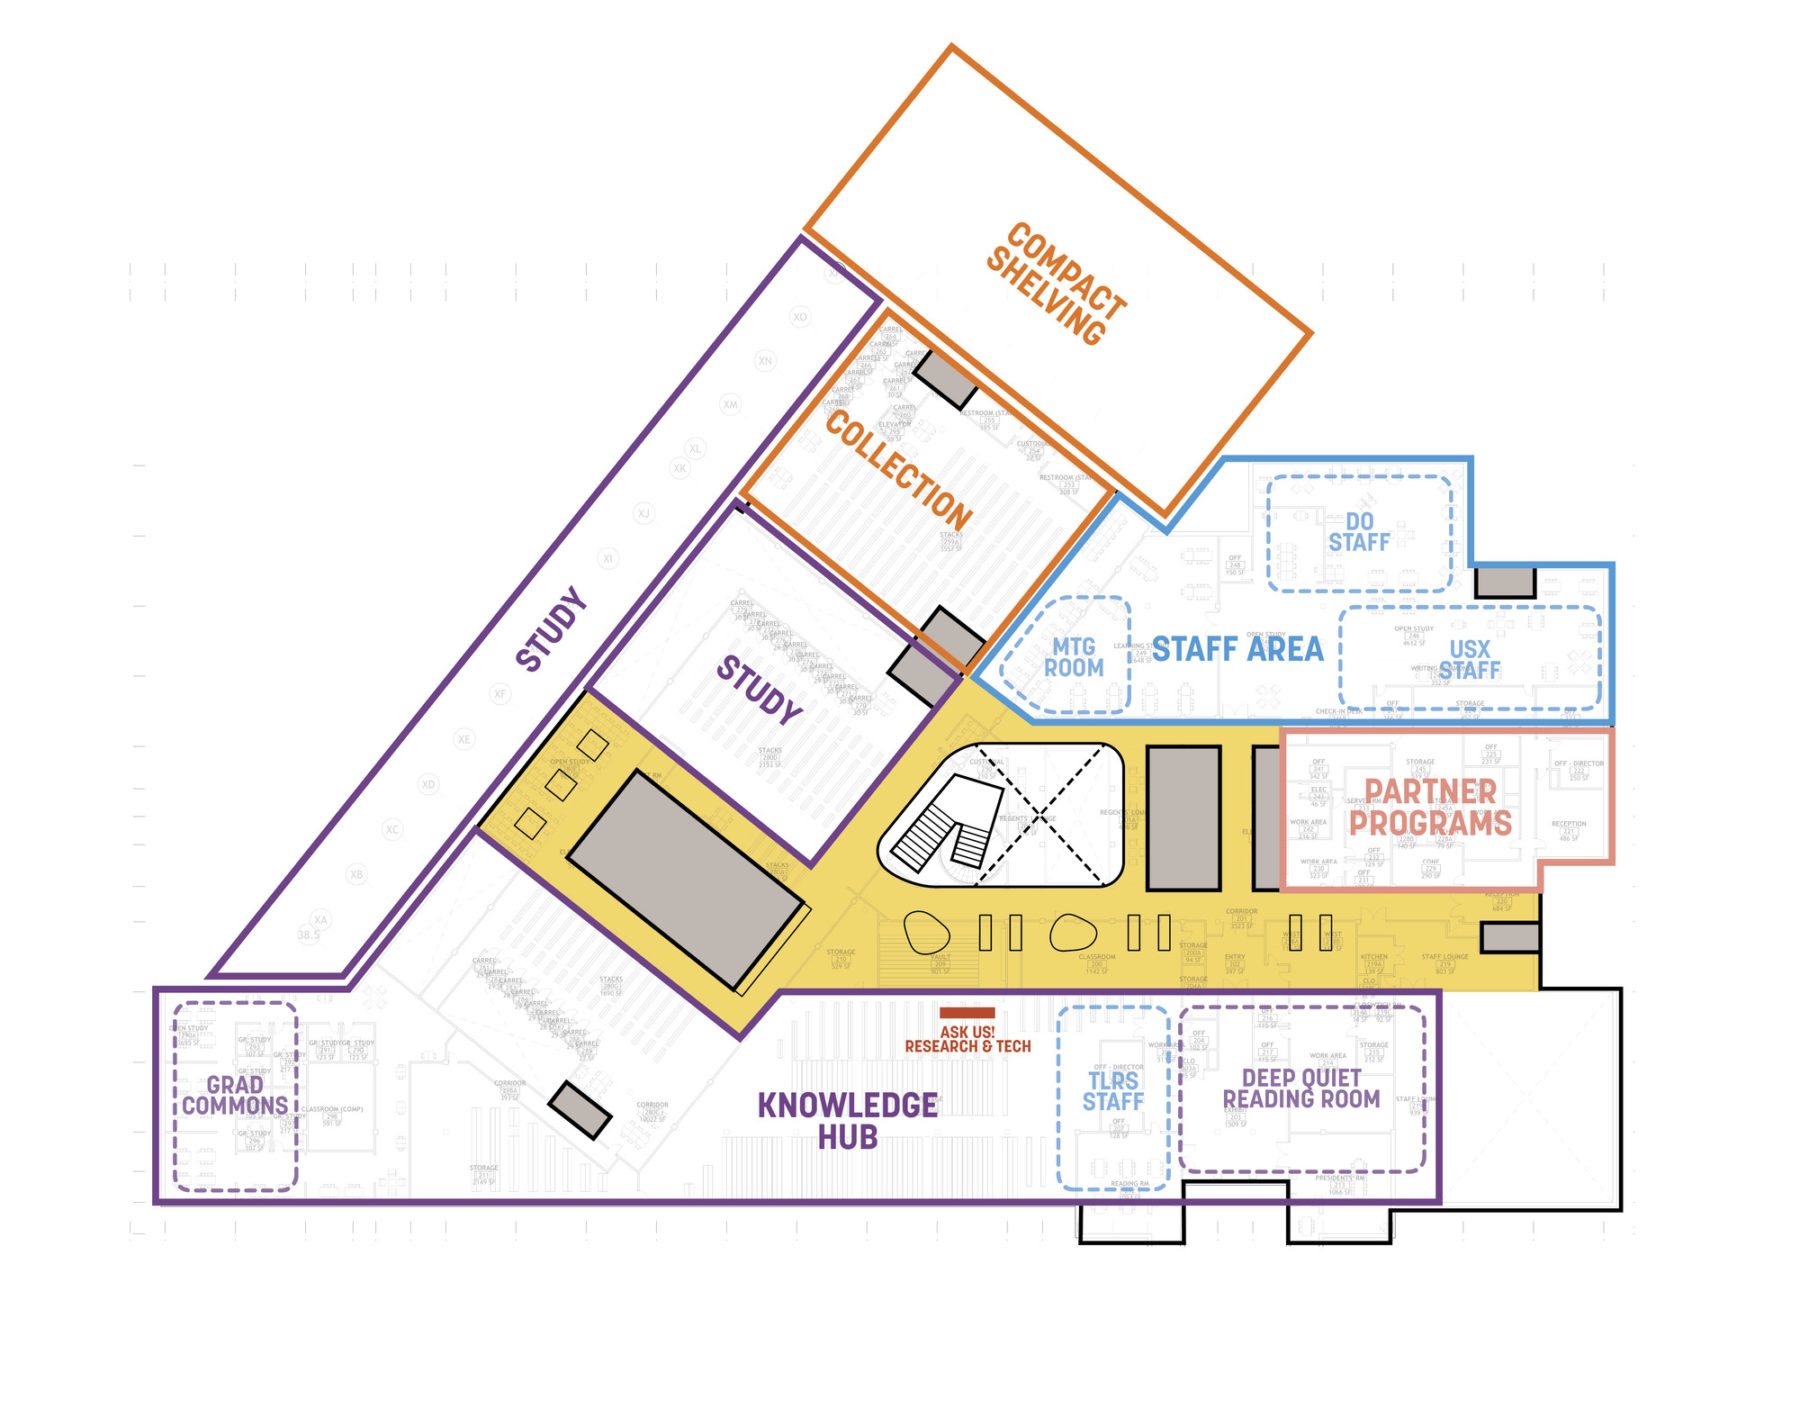 conceptual floor plan - level 2 for option 2